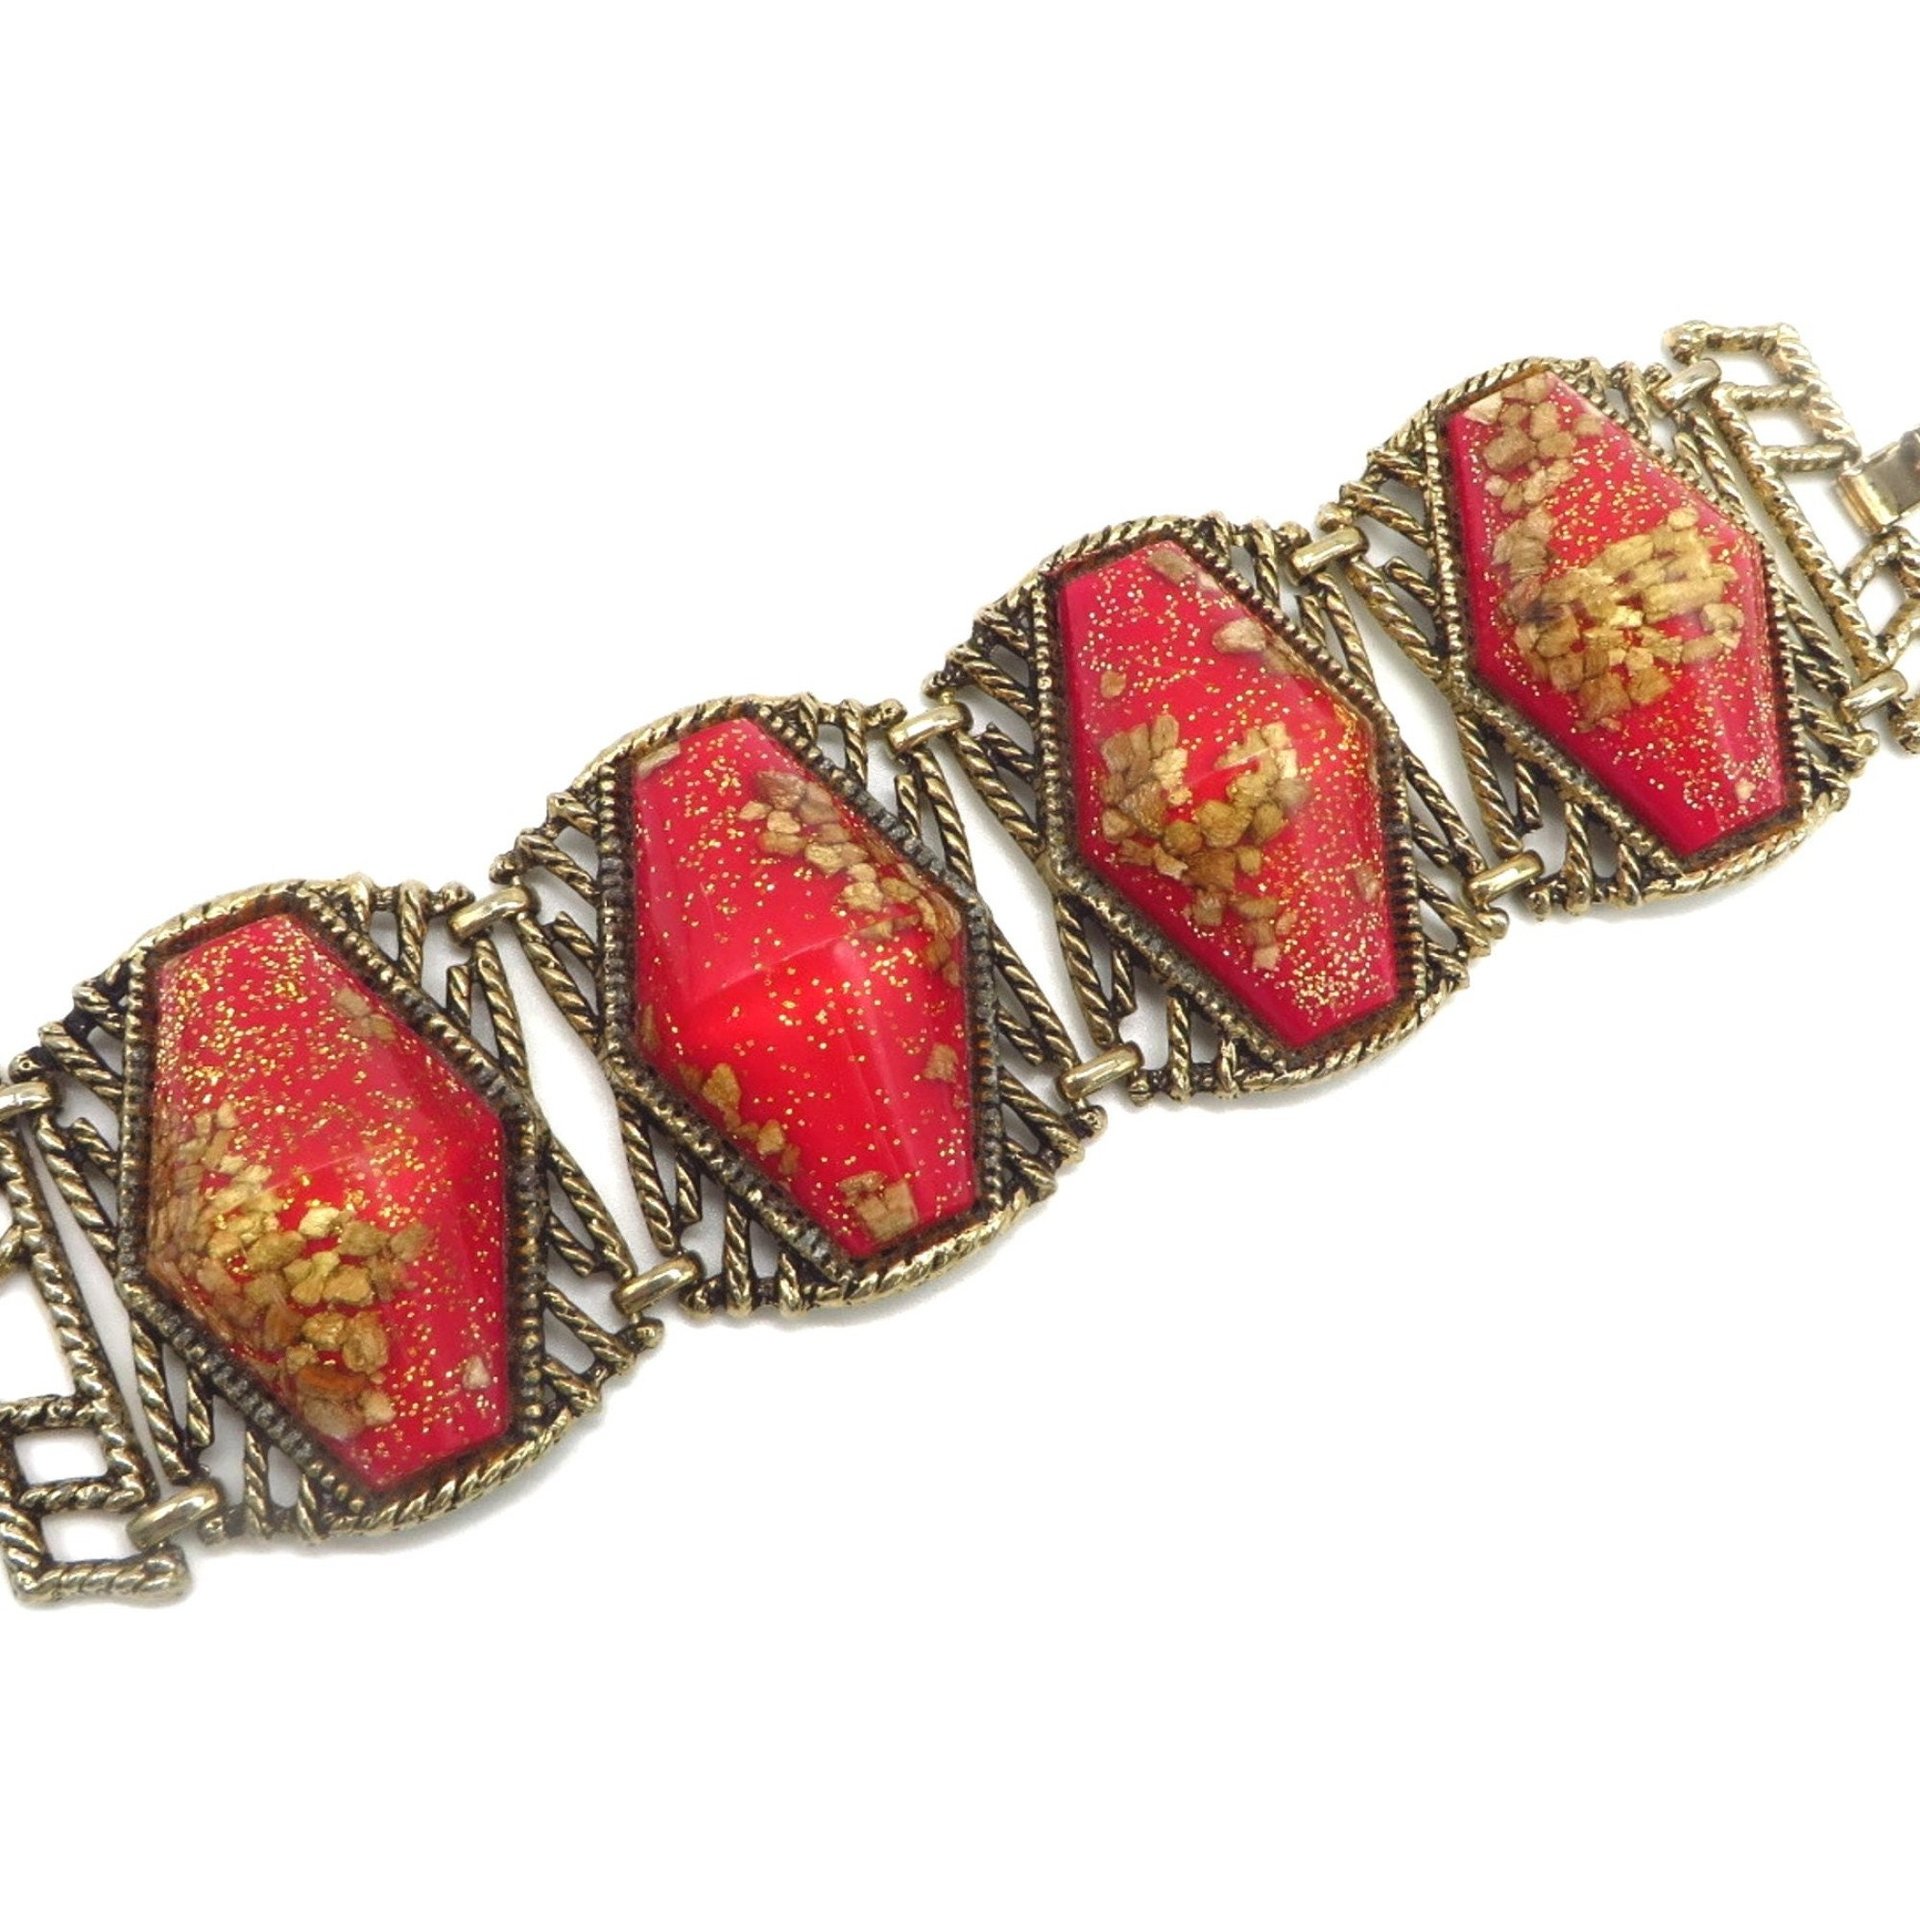 SELRO SELINI Red Lucite, Confetti Panel Bracelet, Vintage Jewelry